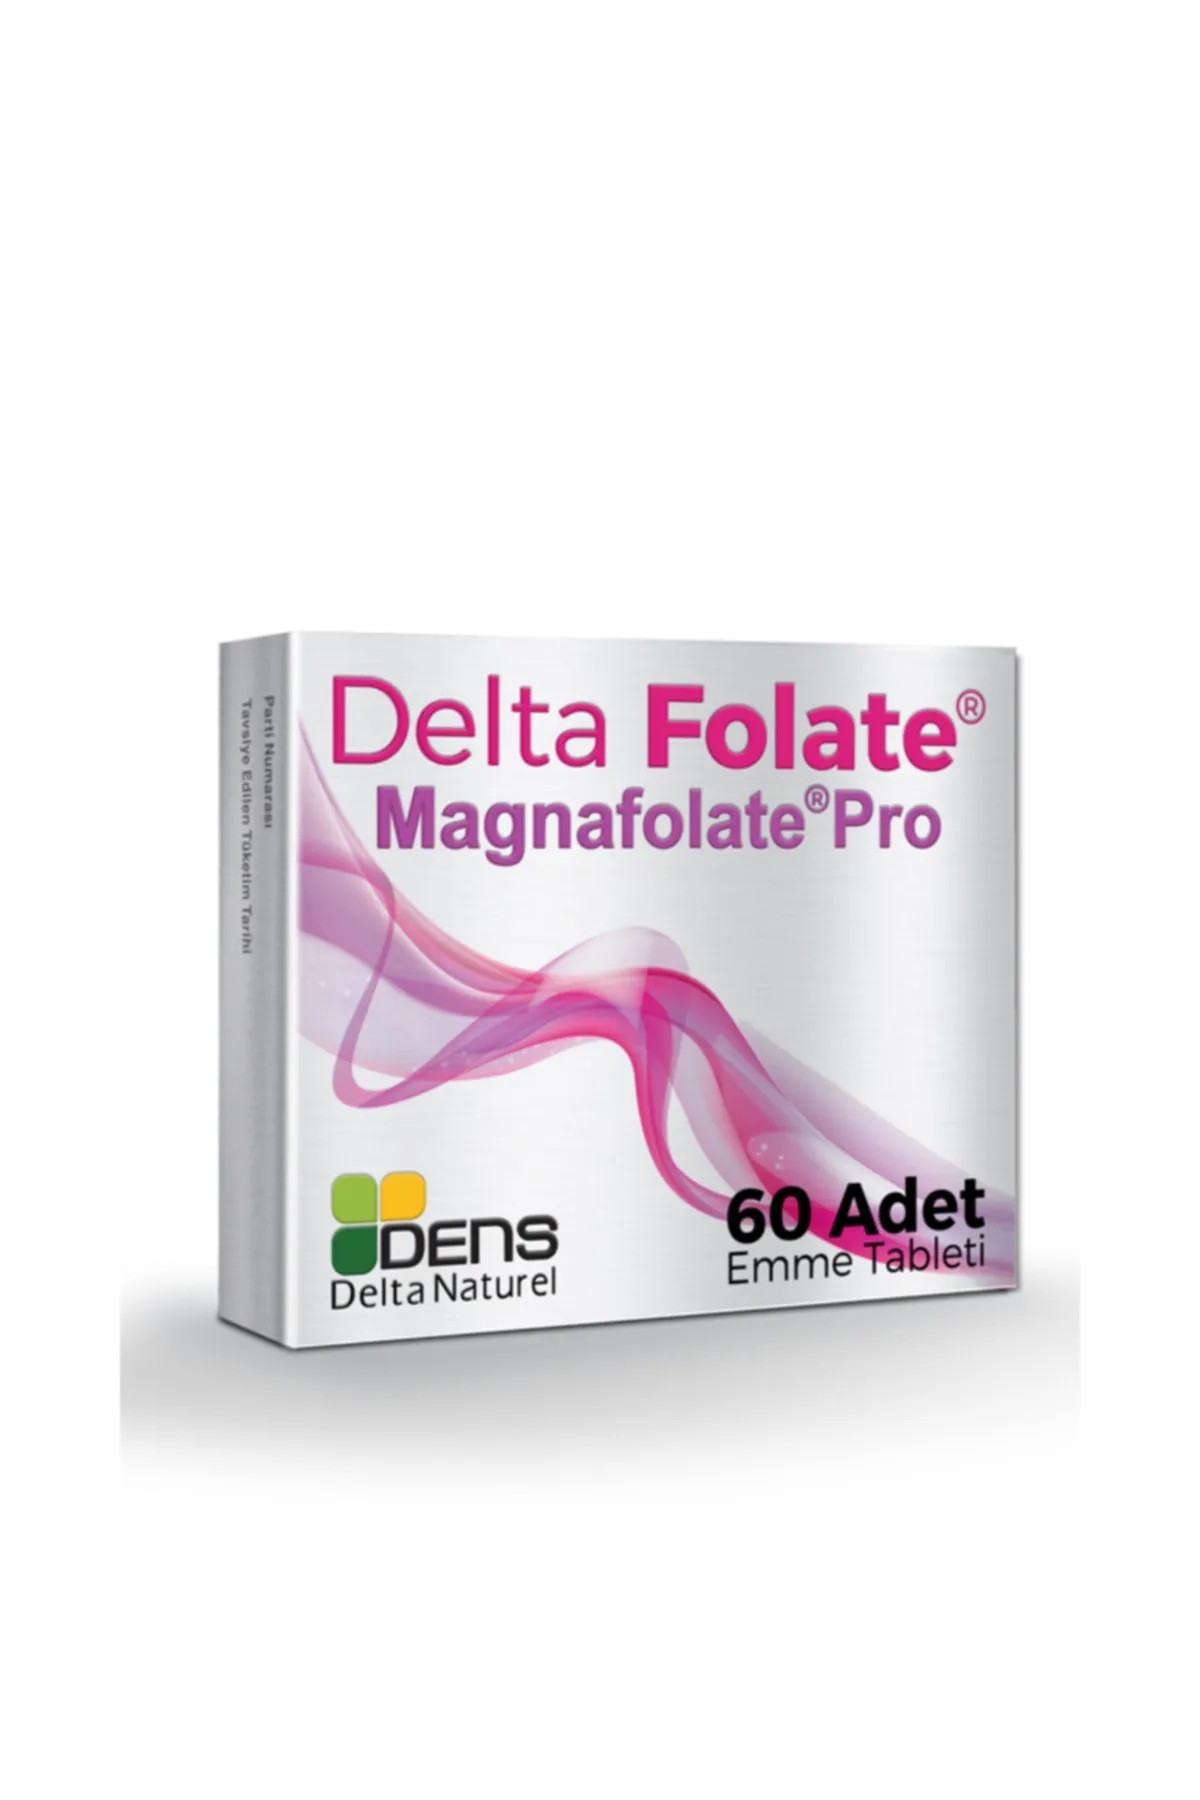 Dens Delta Naturel Delta Folate Magnafolate Pro 60 Emme Tableti